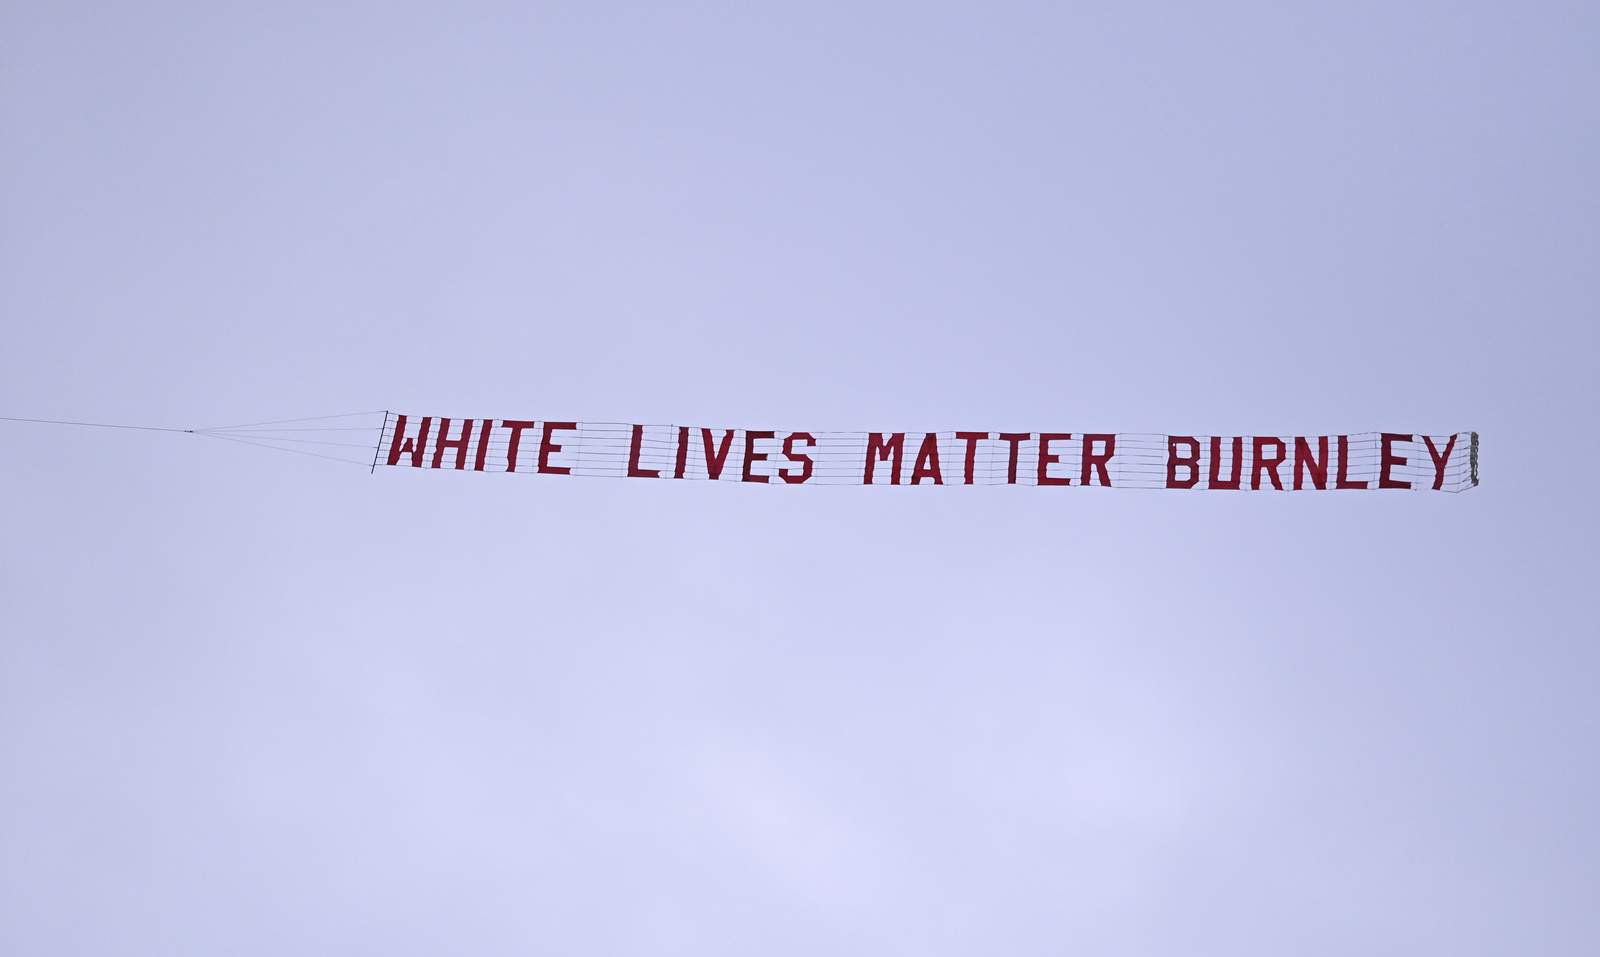 Police investigating 'White Lives Matter' banner